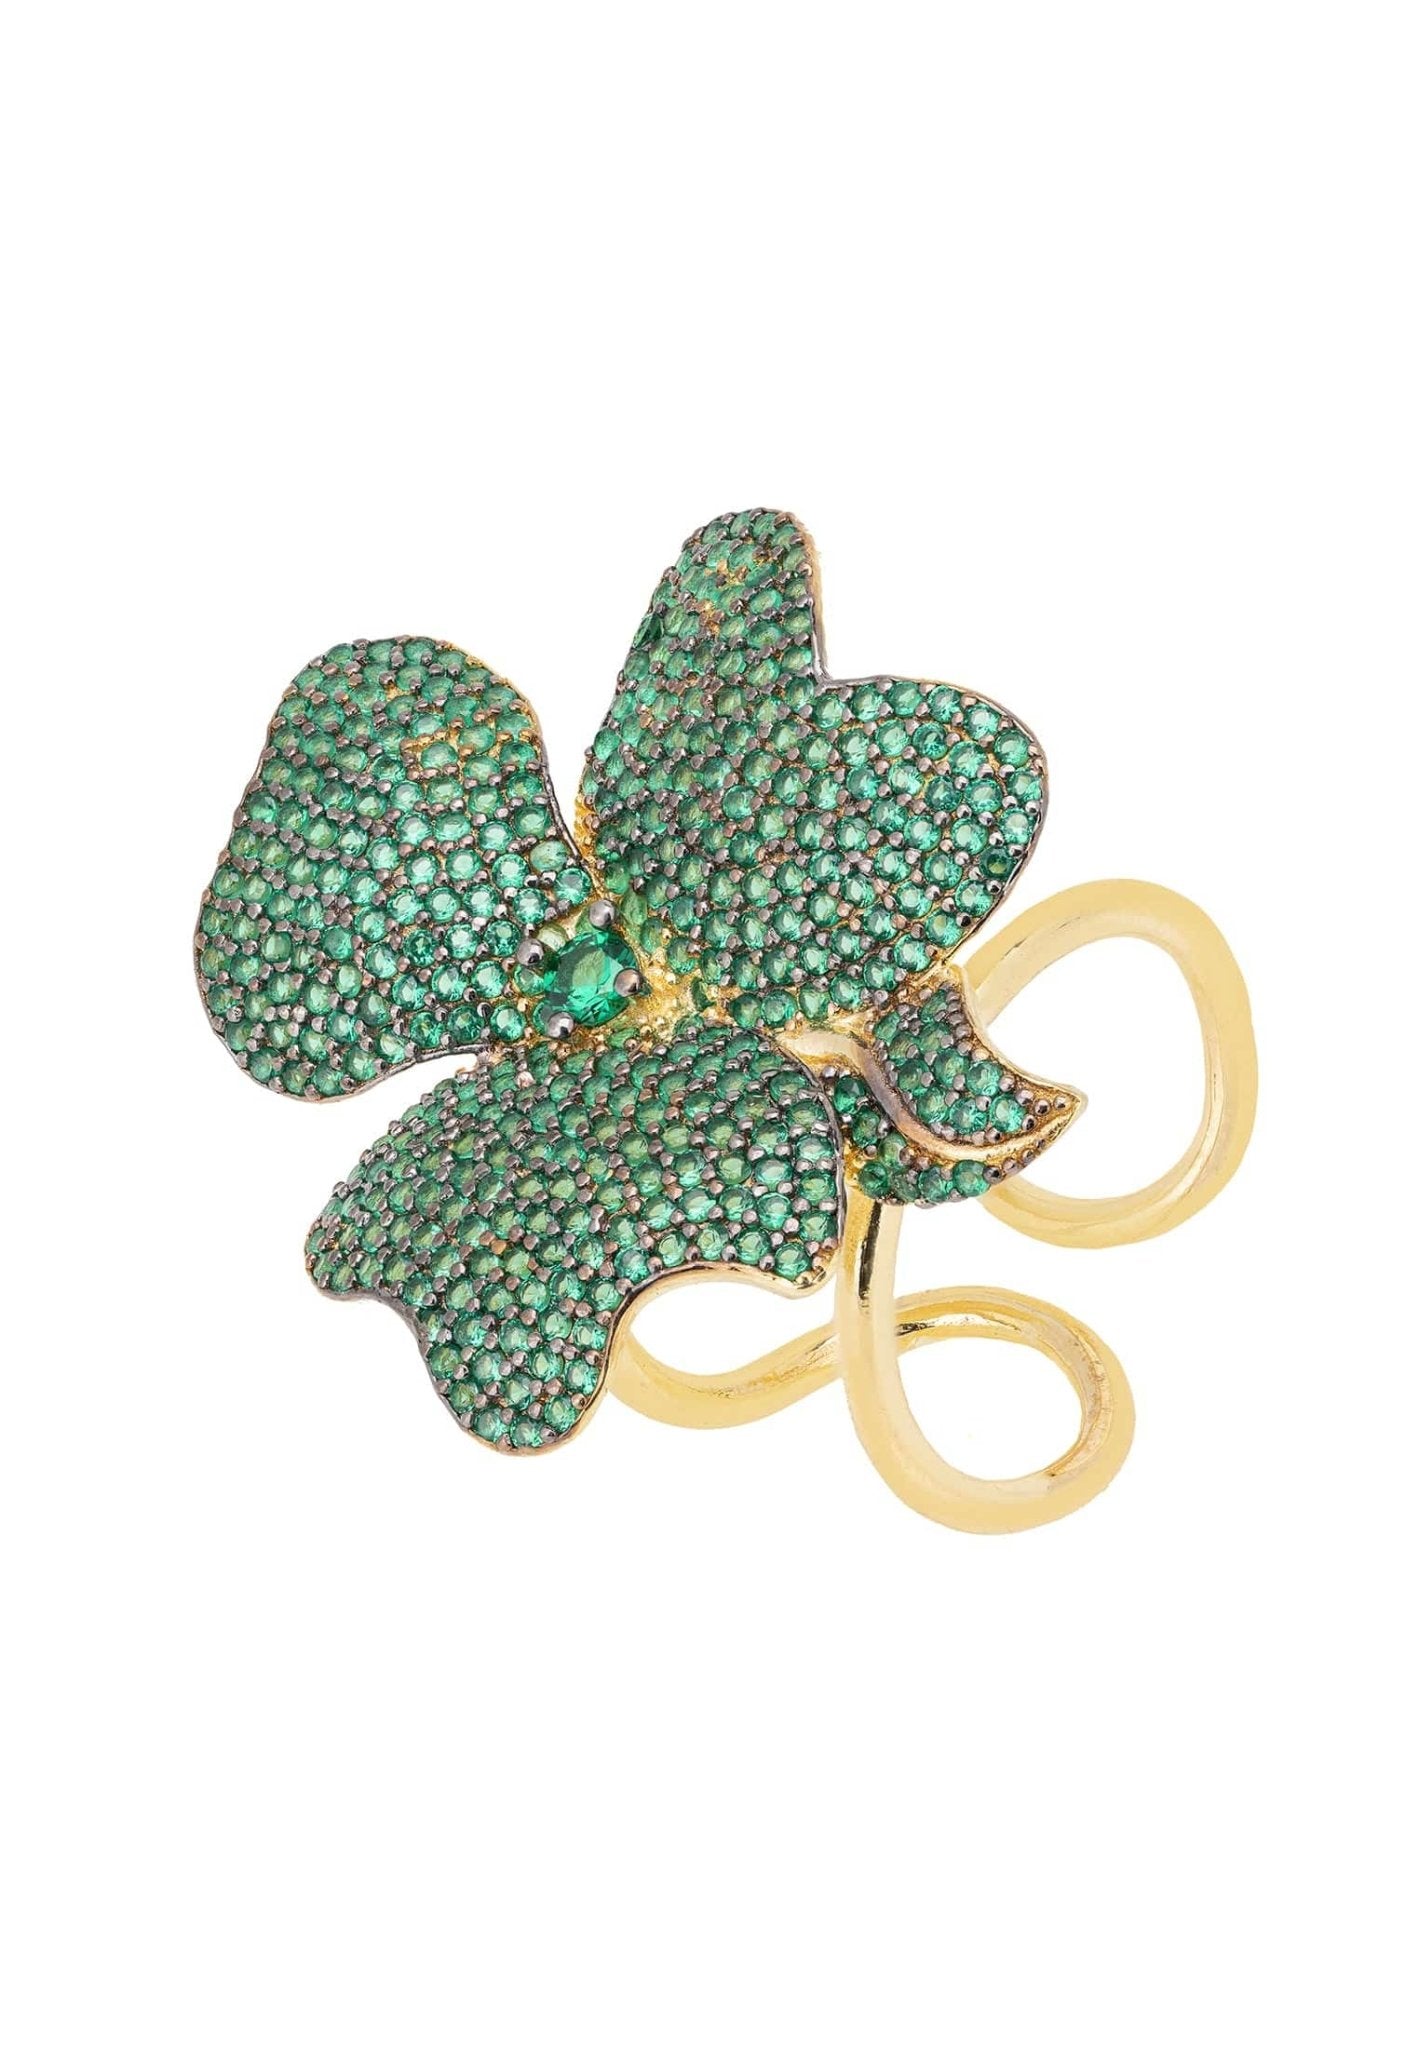 Flower Cocktail Ring Gold Emerald Green - LATELITA Rings